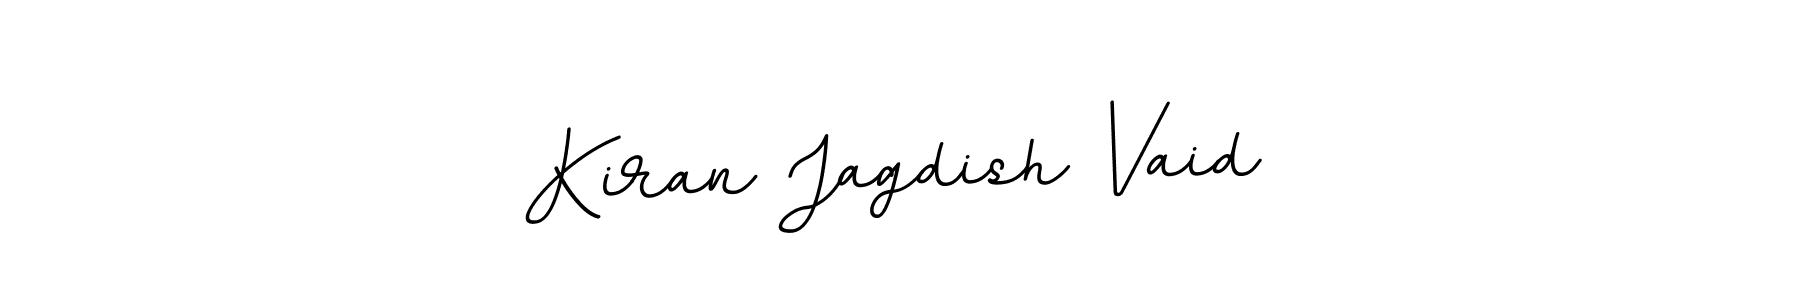 How to Draw Kiran Jagdish Vaid signature style? BallpointsItalic-DORy9 is a latest design signature styles for name Kiran Jagdish Vaid. Kiran Jagdish Vaid signature style 11 images and pictures png